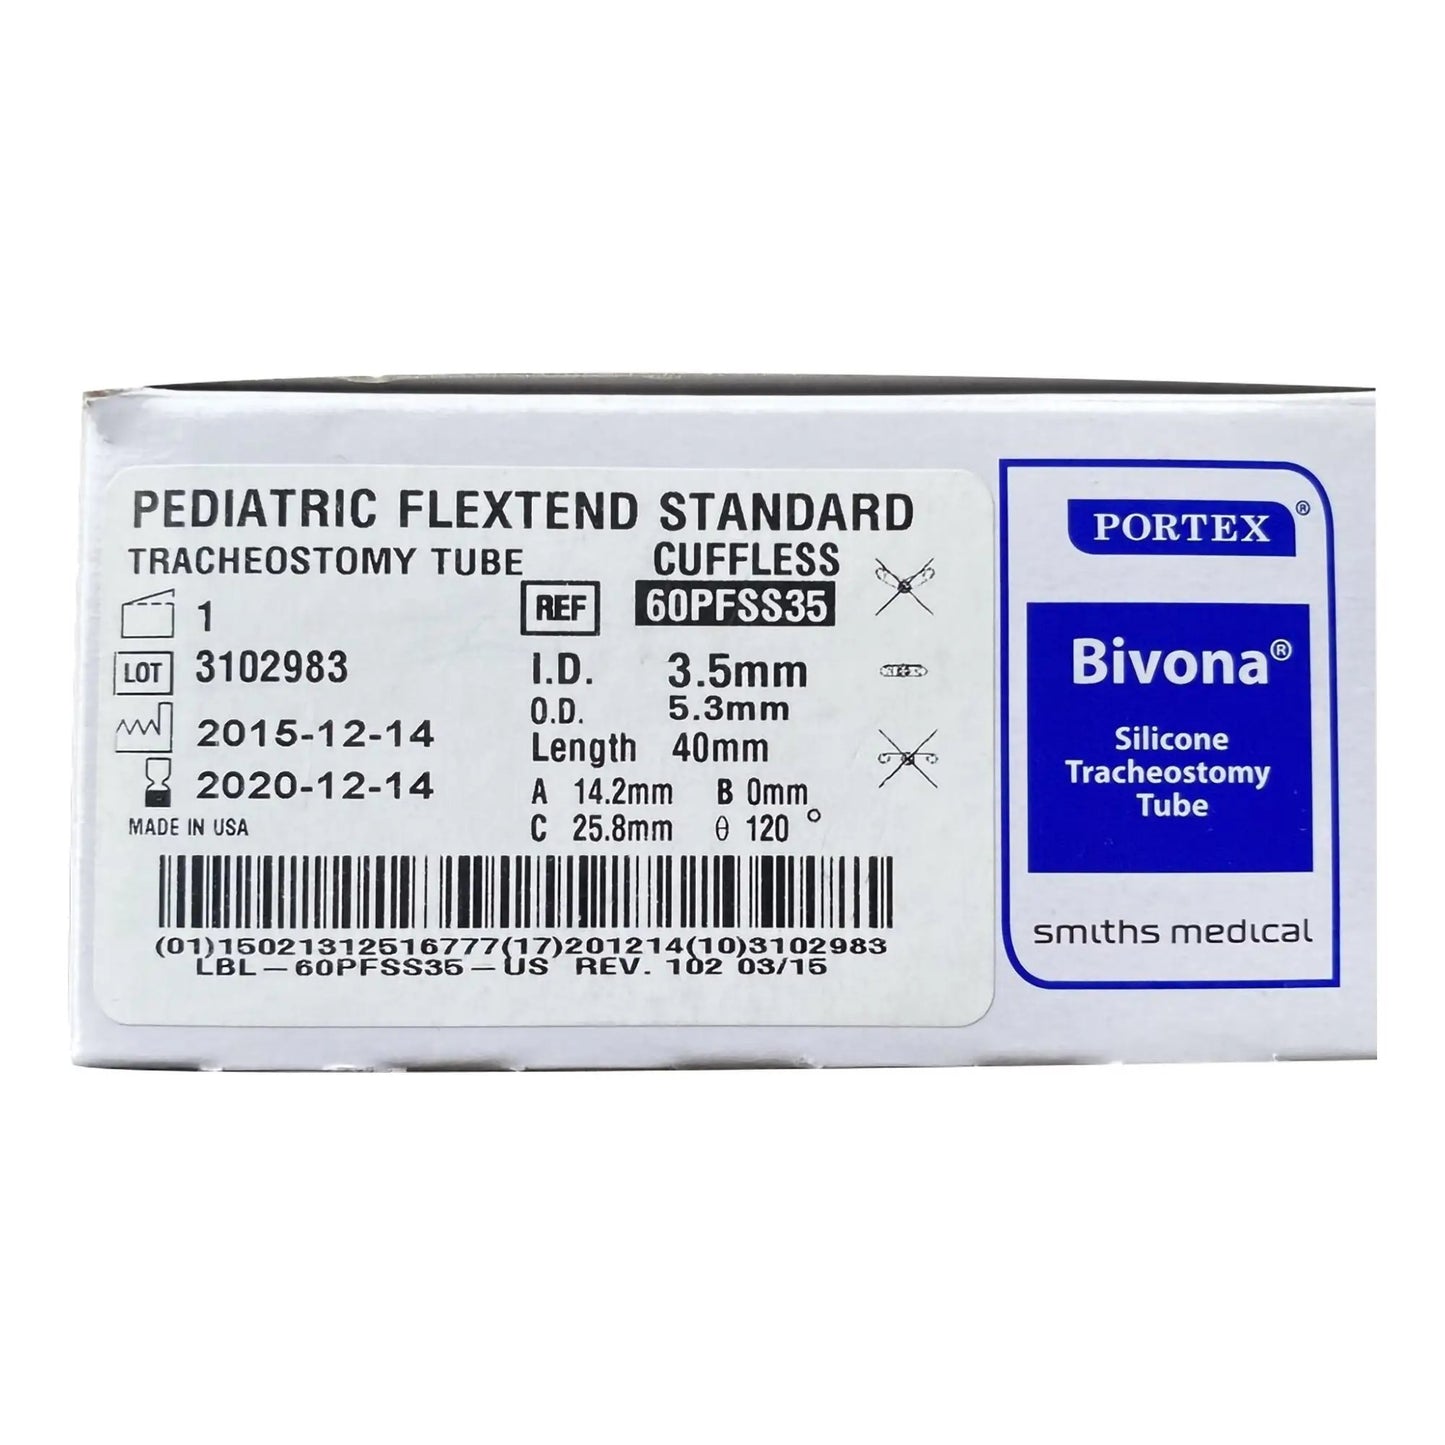 Bivona FlexTend Plus Tracheostomy Tube, Size 3.5